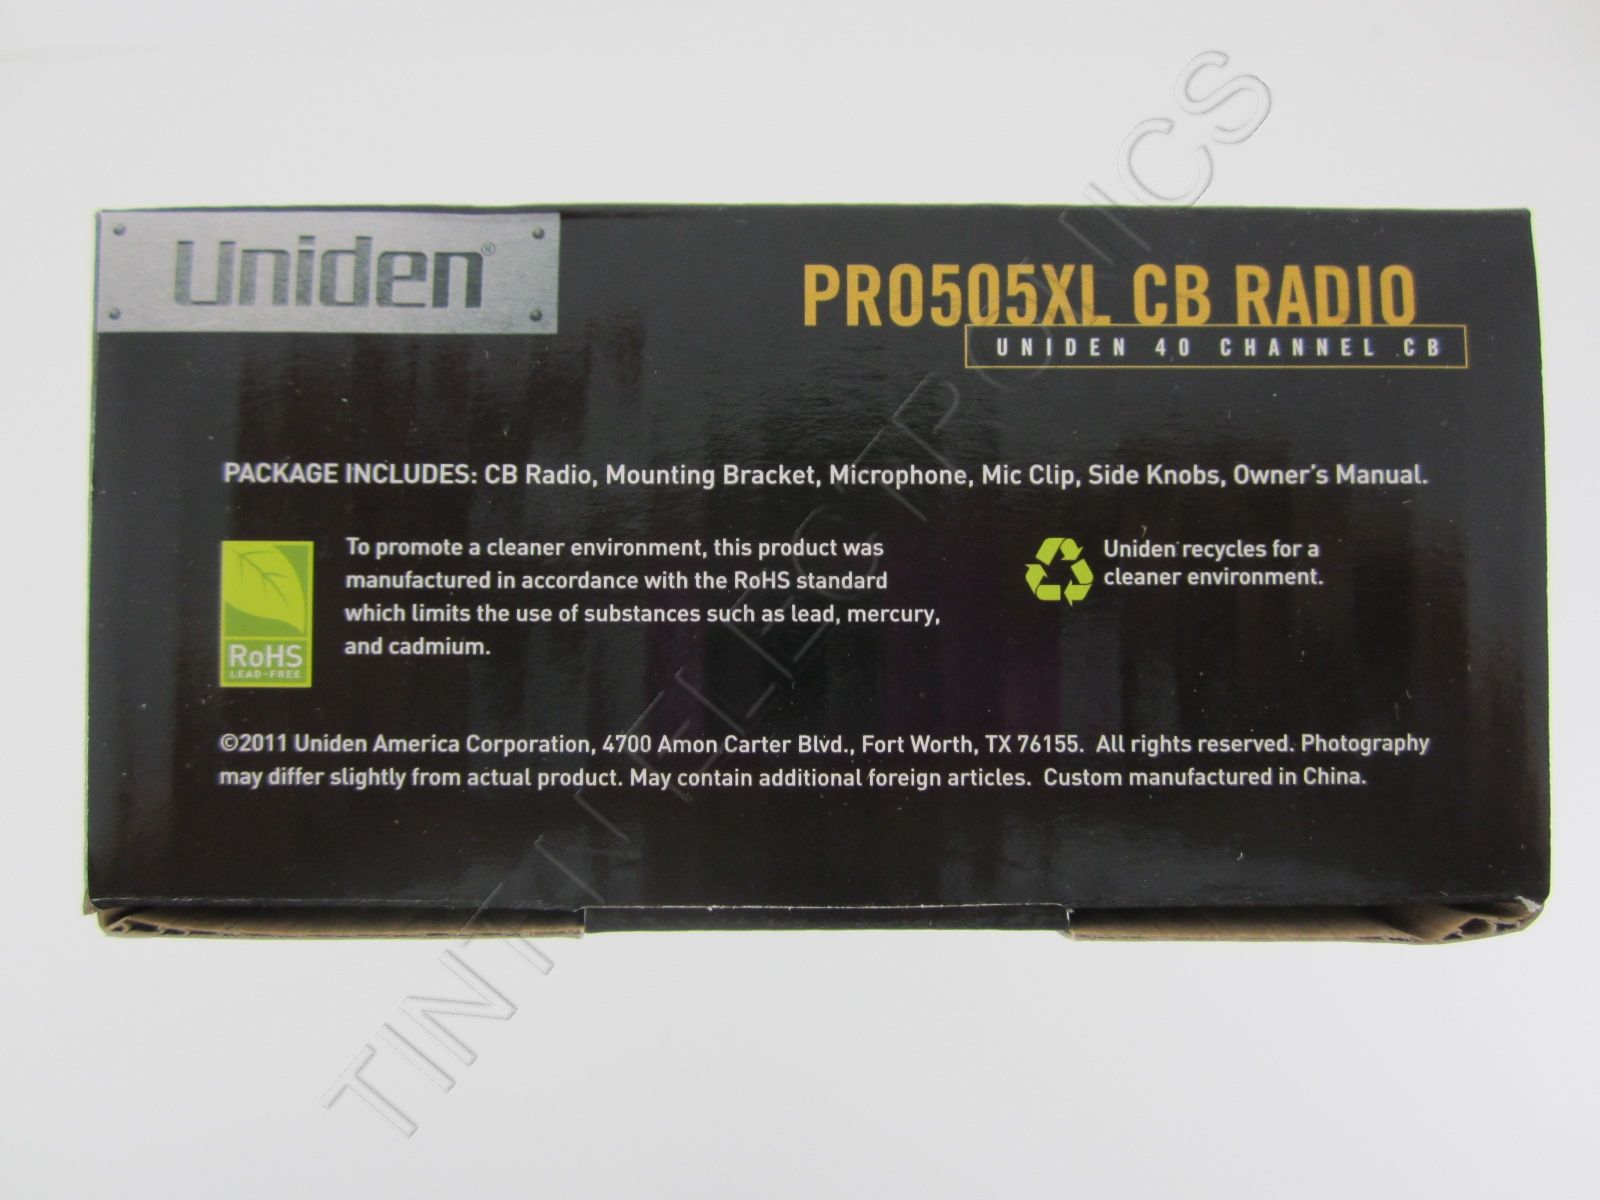   cb radio product condition new description this compact cb transceiver